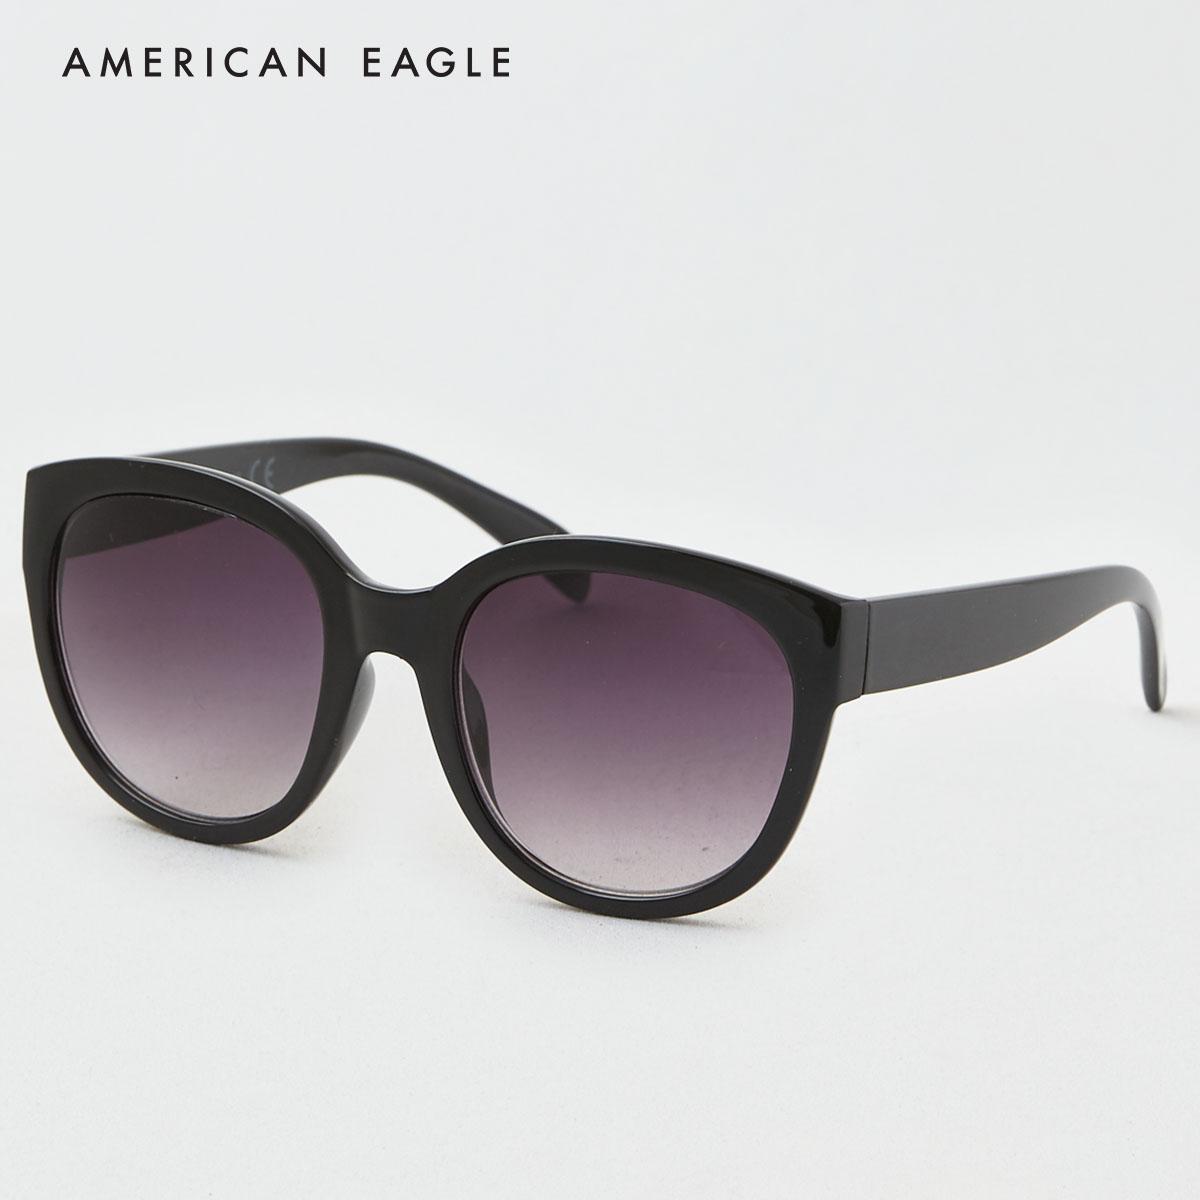 American Eagle Black Oversized Square Sunglasses แว่นตา ผู้หญิง แฟชั่น(048-8608-001)